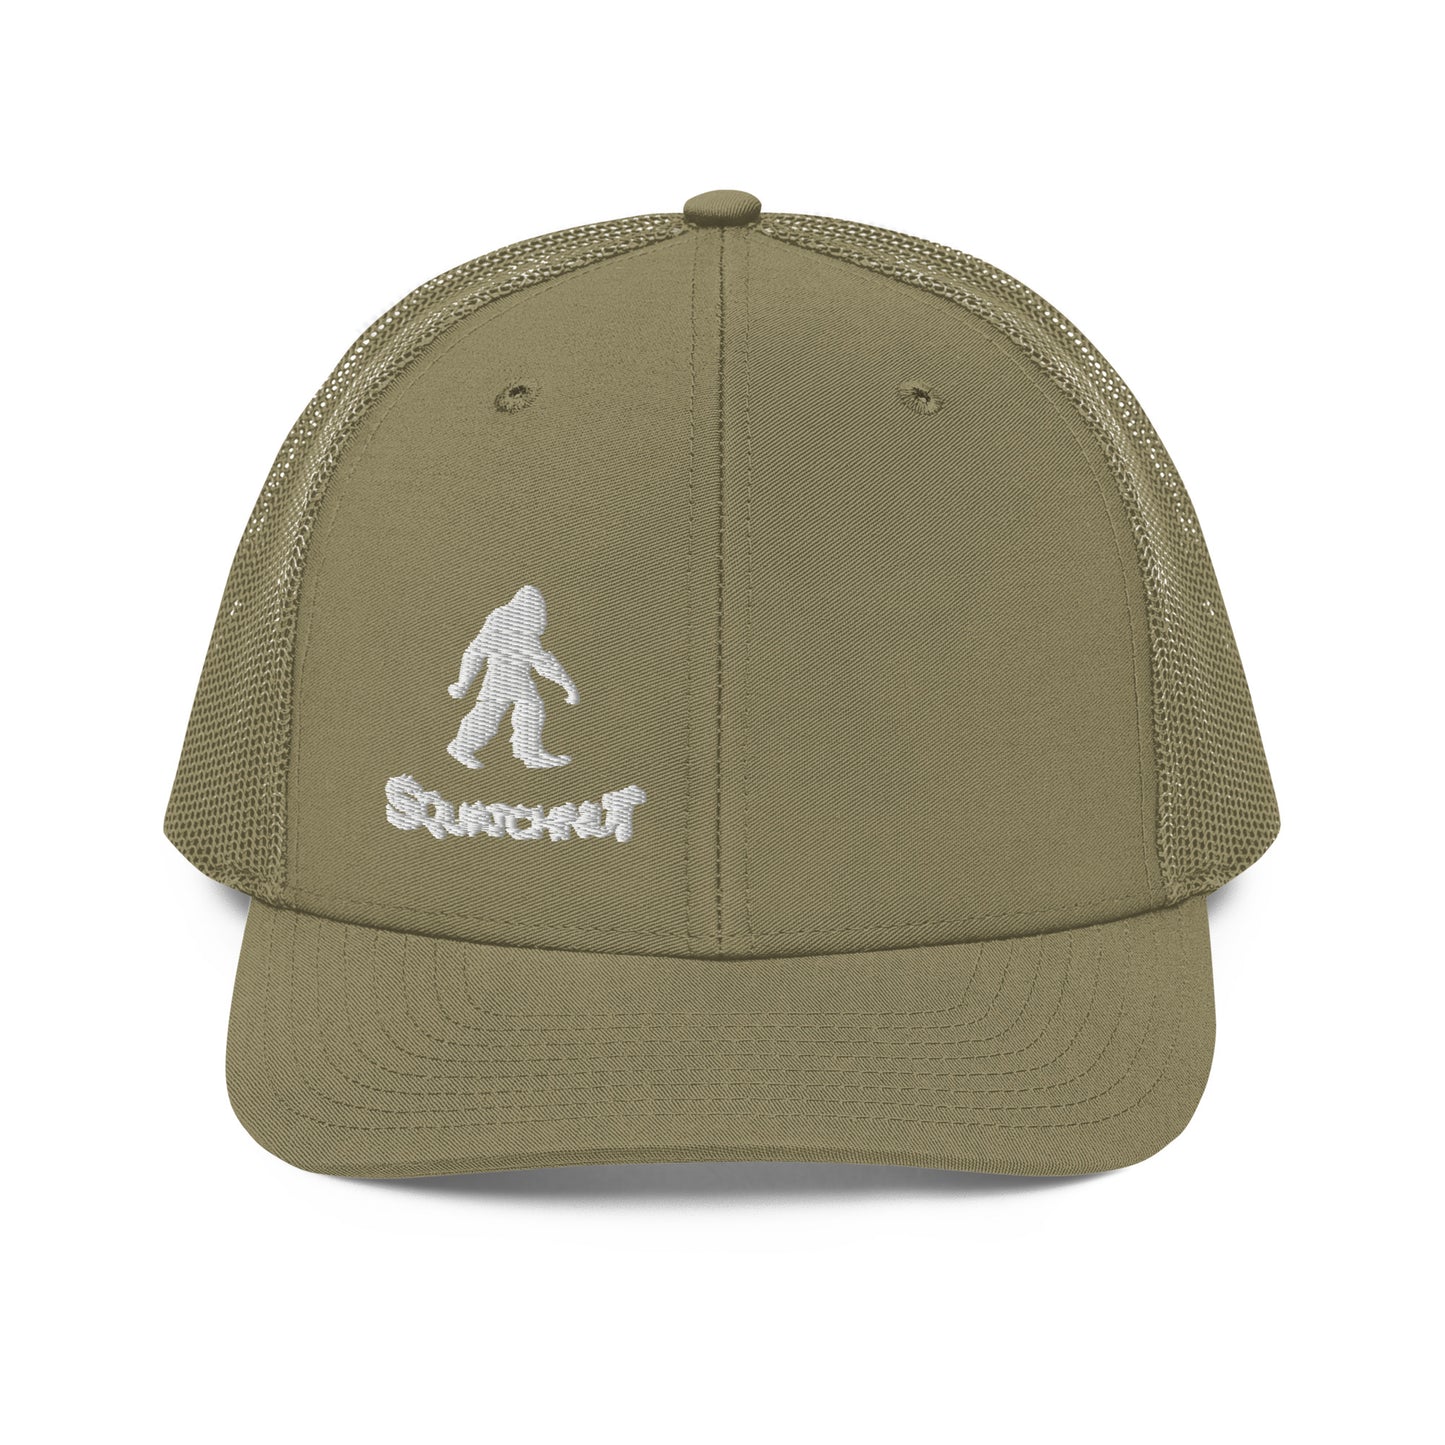 Squatchnut logo Trucker Cap